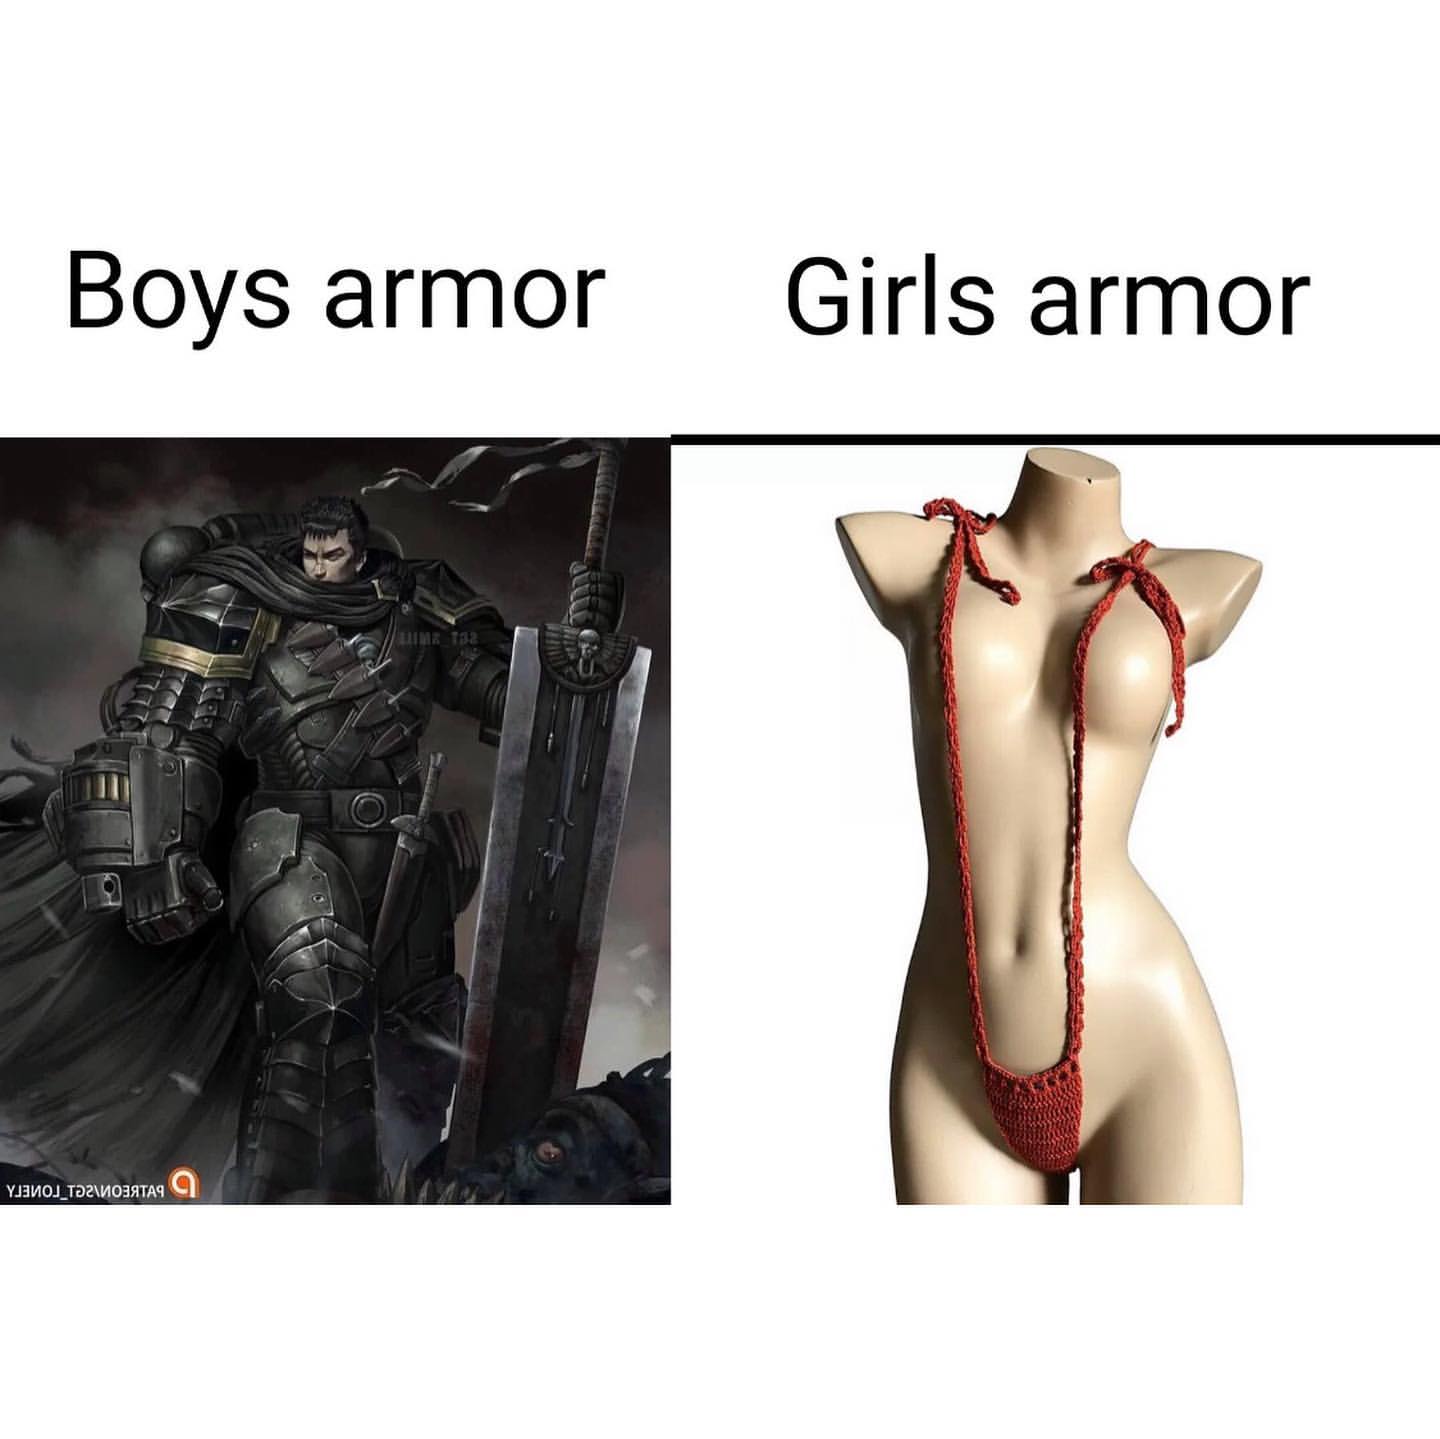 Boys armor. Girls armor.